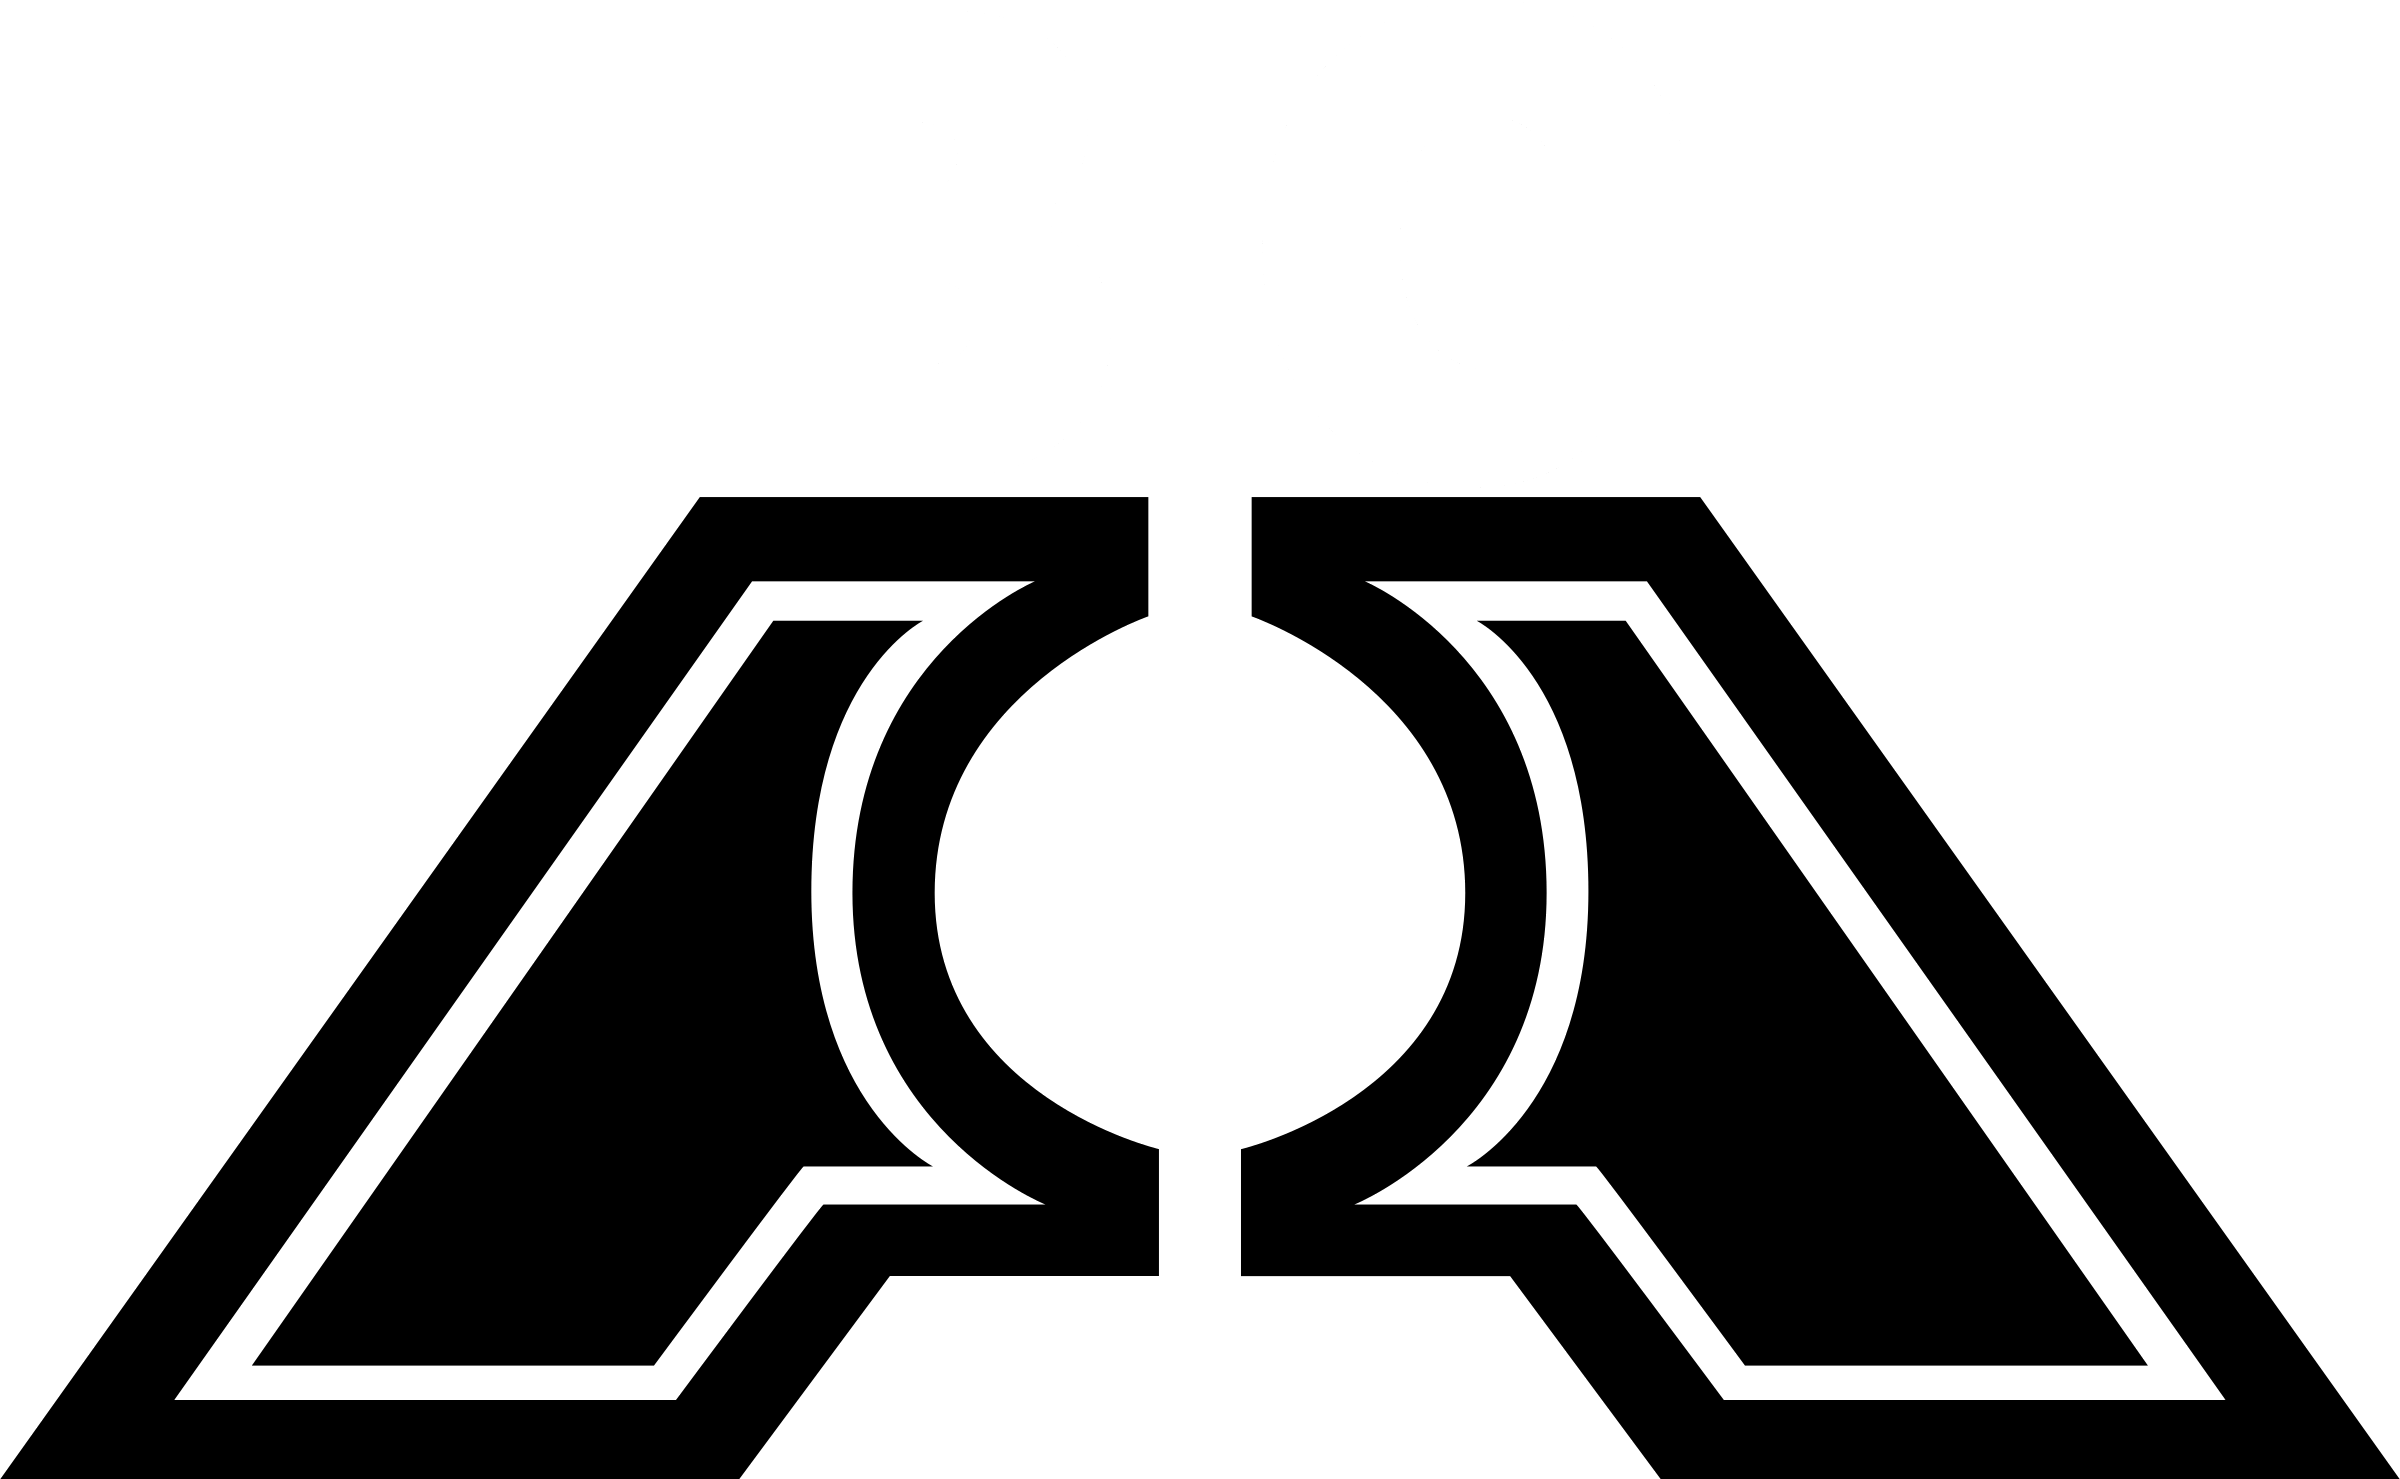 Big a Auto Parts Logo - BIG A AUTO PARTS Logo PNG Transparent & SVG Vector - Freebie Supply